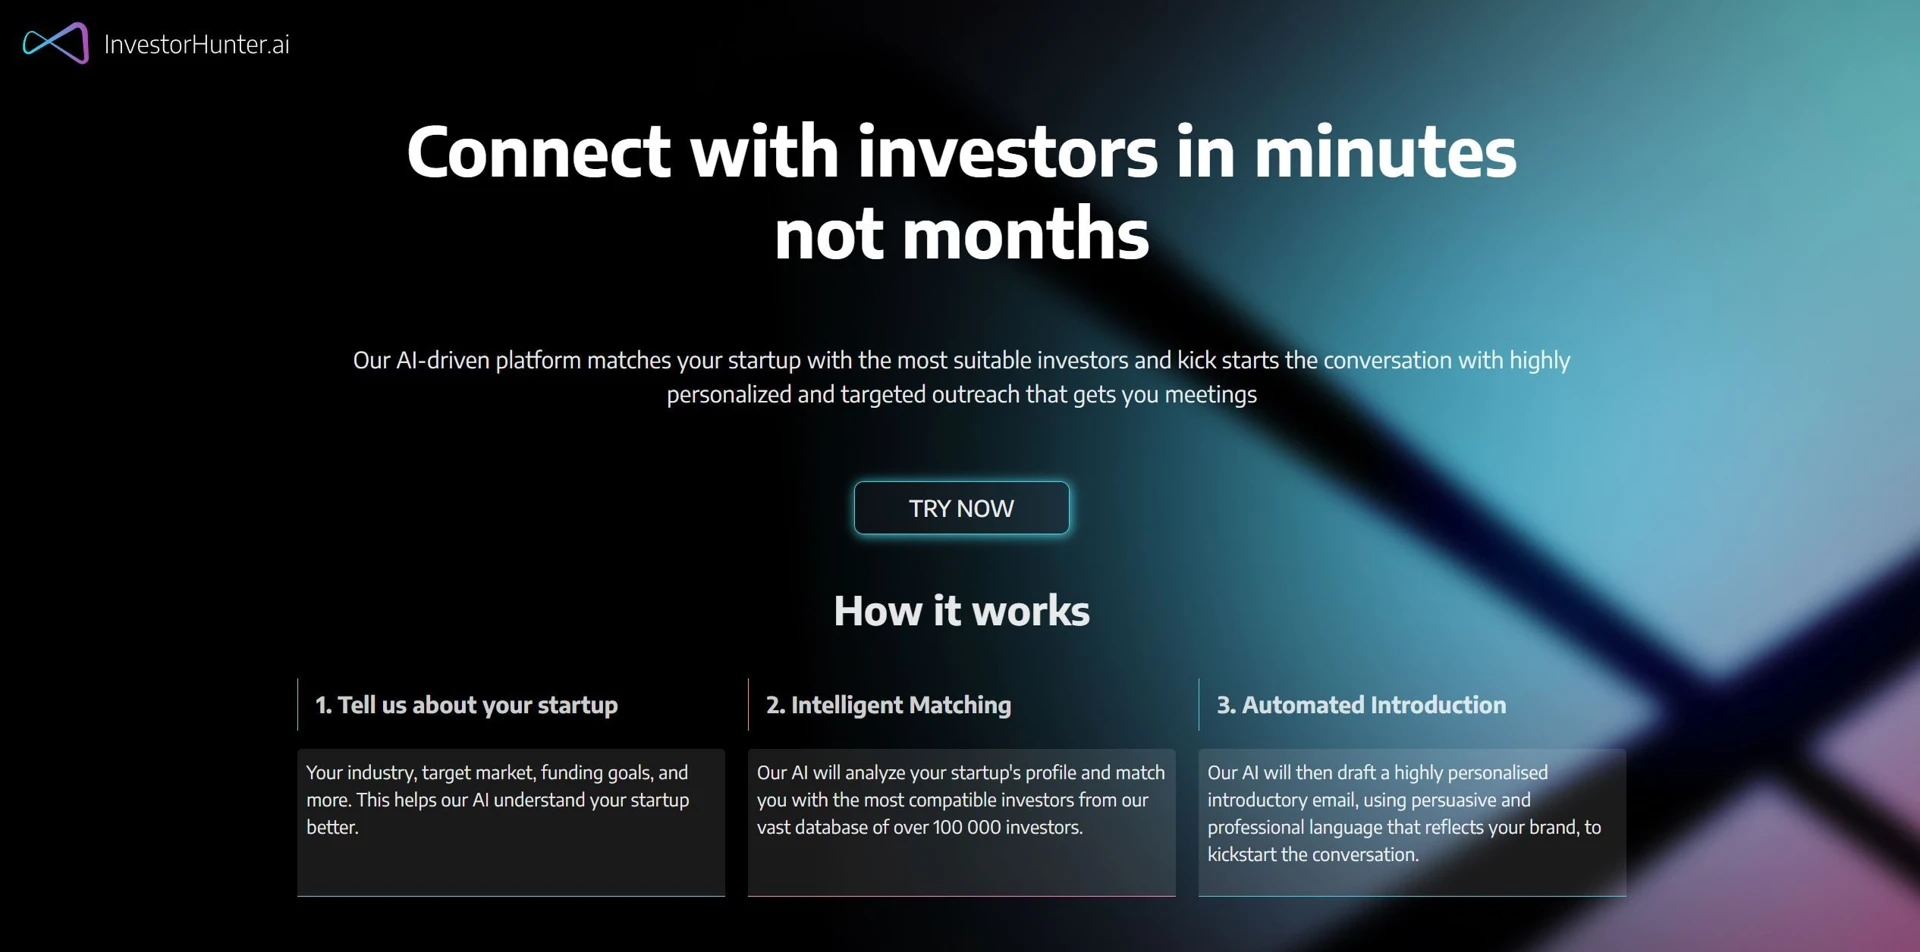 Investor Hunterwebsite picture